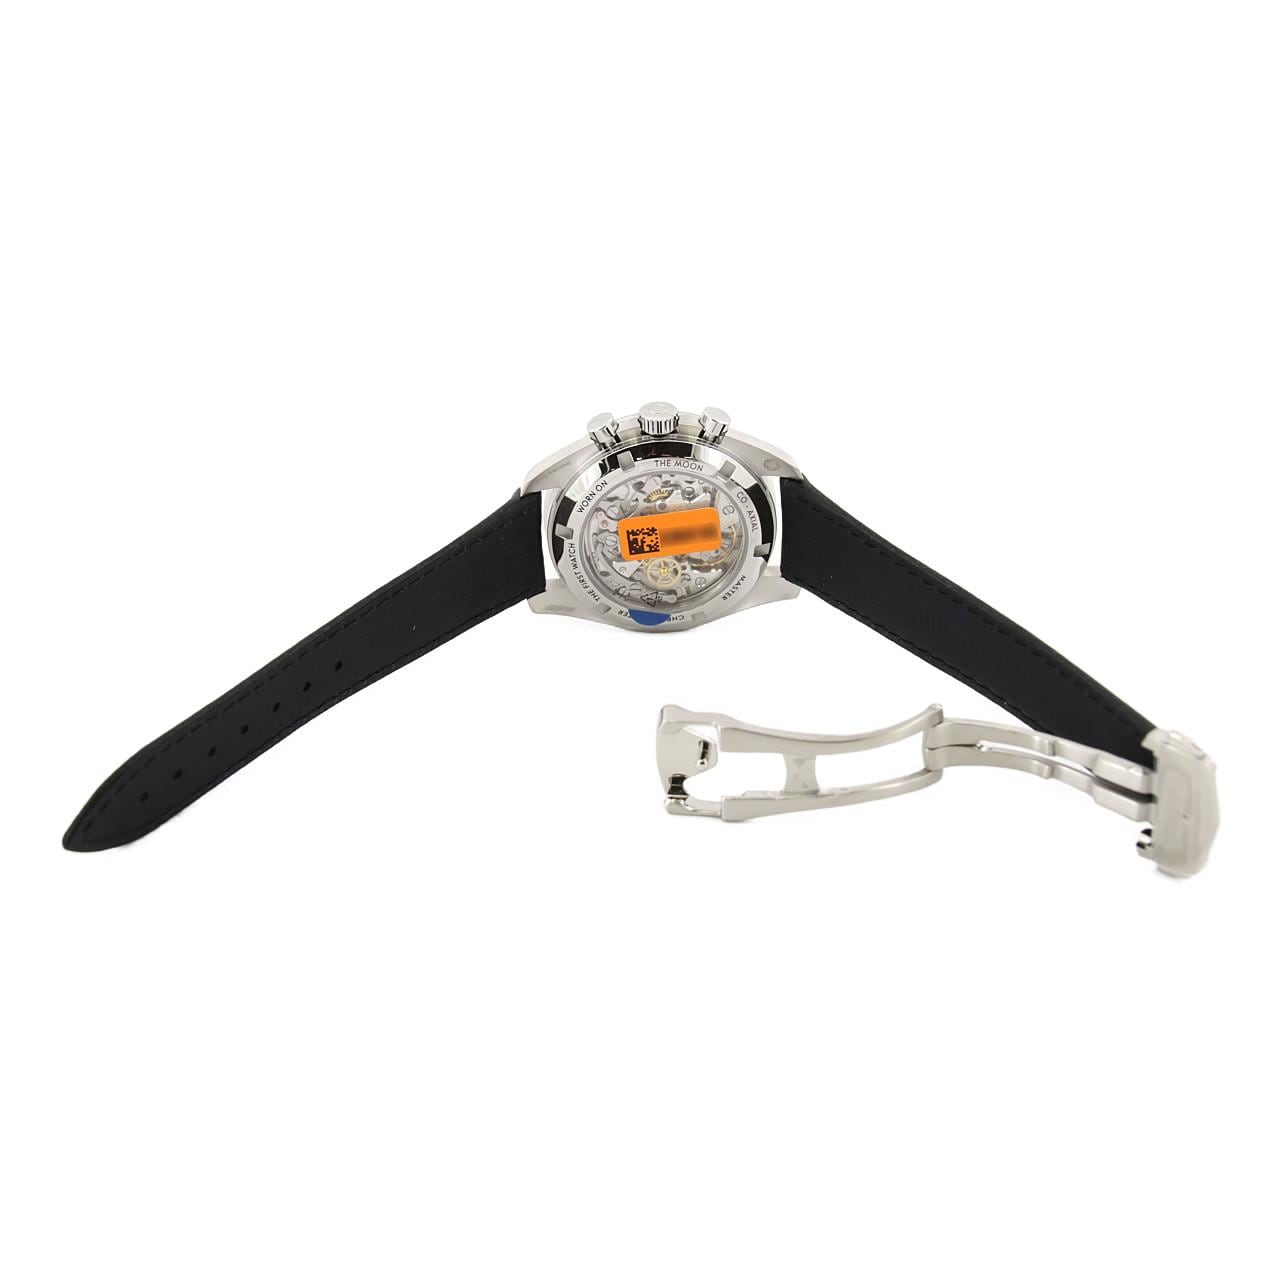 [BRAND NEW] Omega Speedmaster Moonwatch Professional 310.32.42.50.01.002 SS Manual Winding